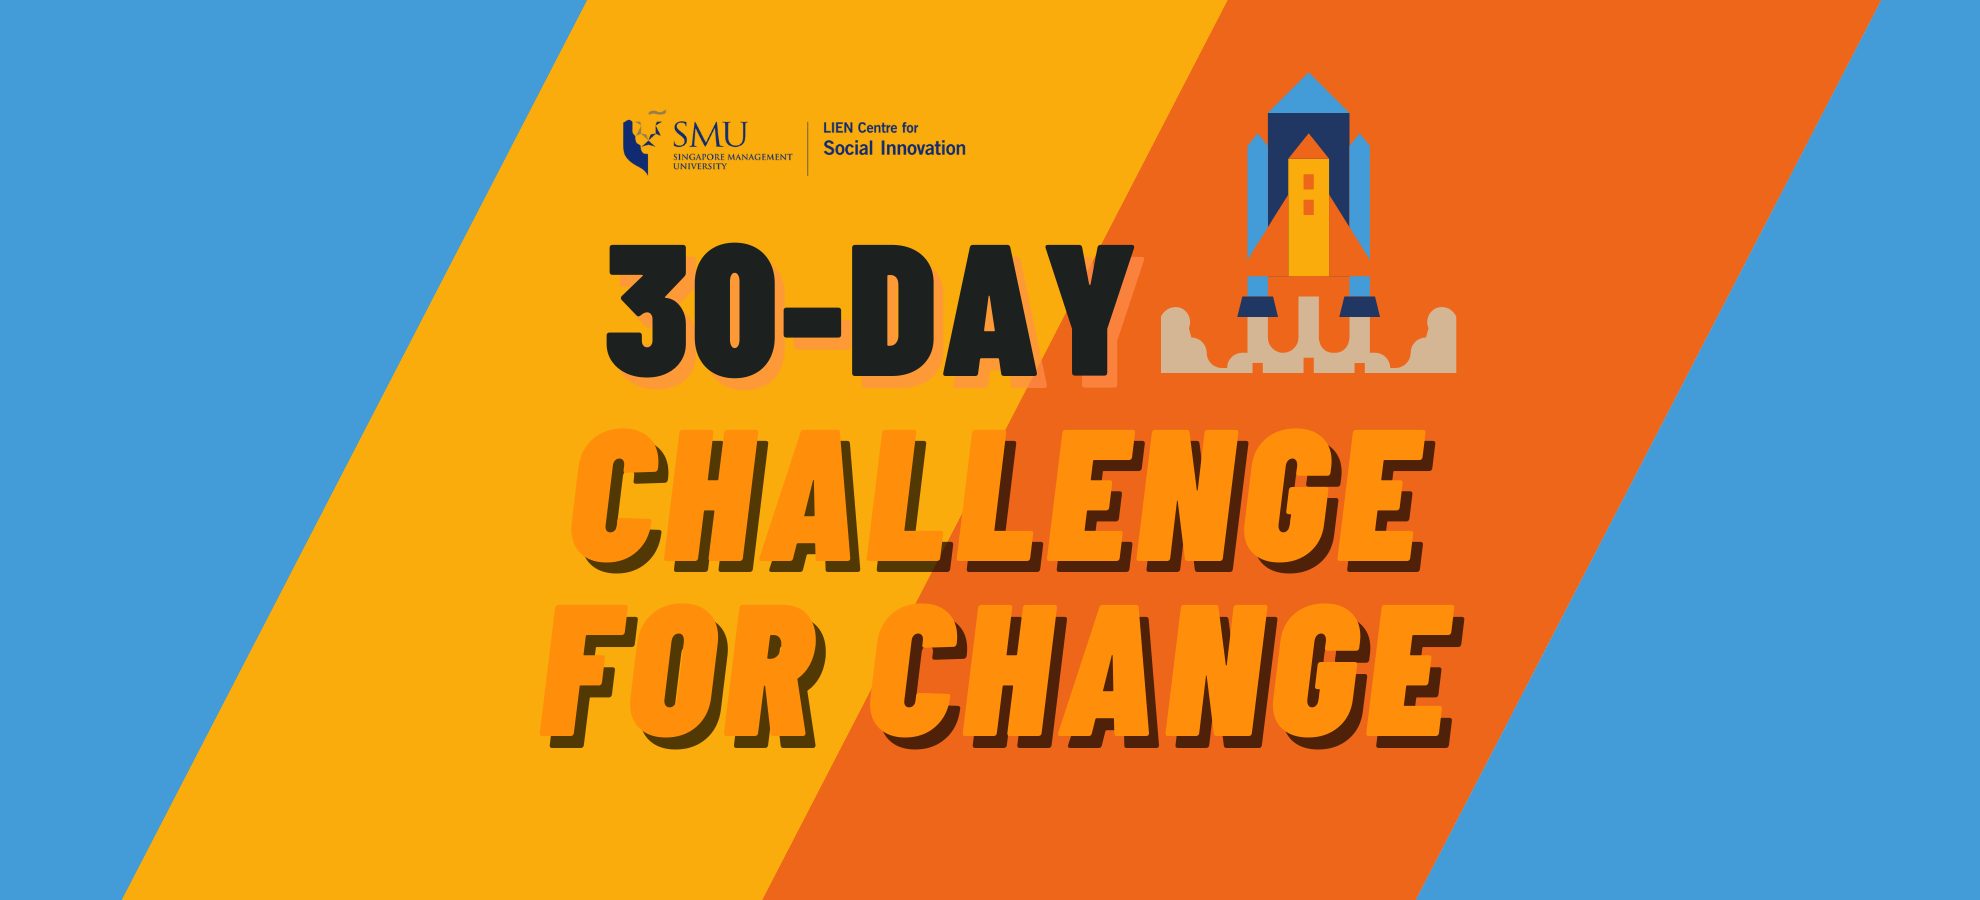 30 days challenge for change banner